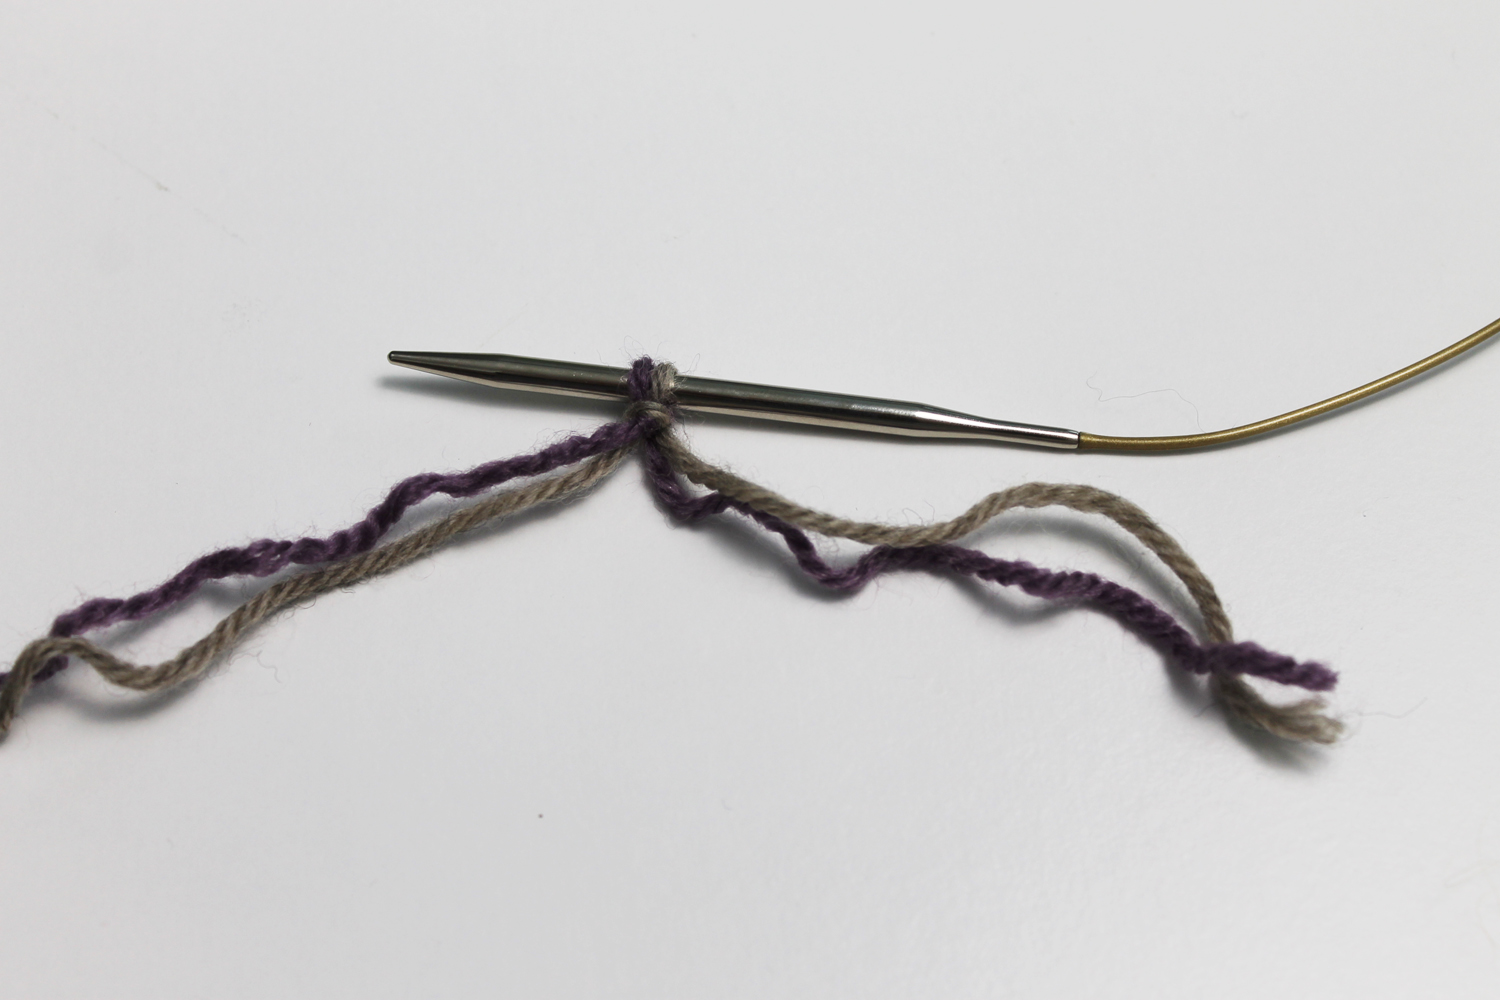 Double knitting cast on slip knot